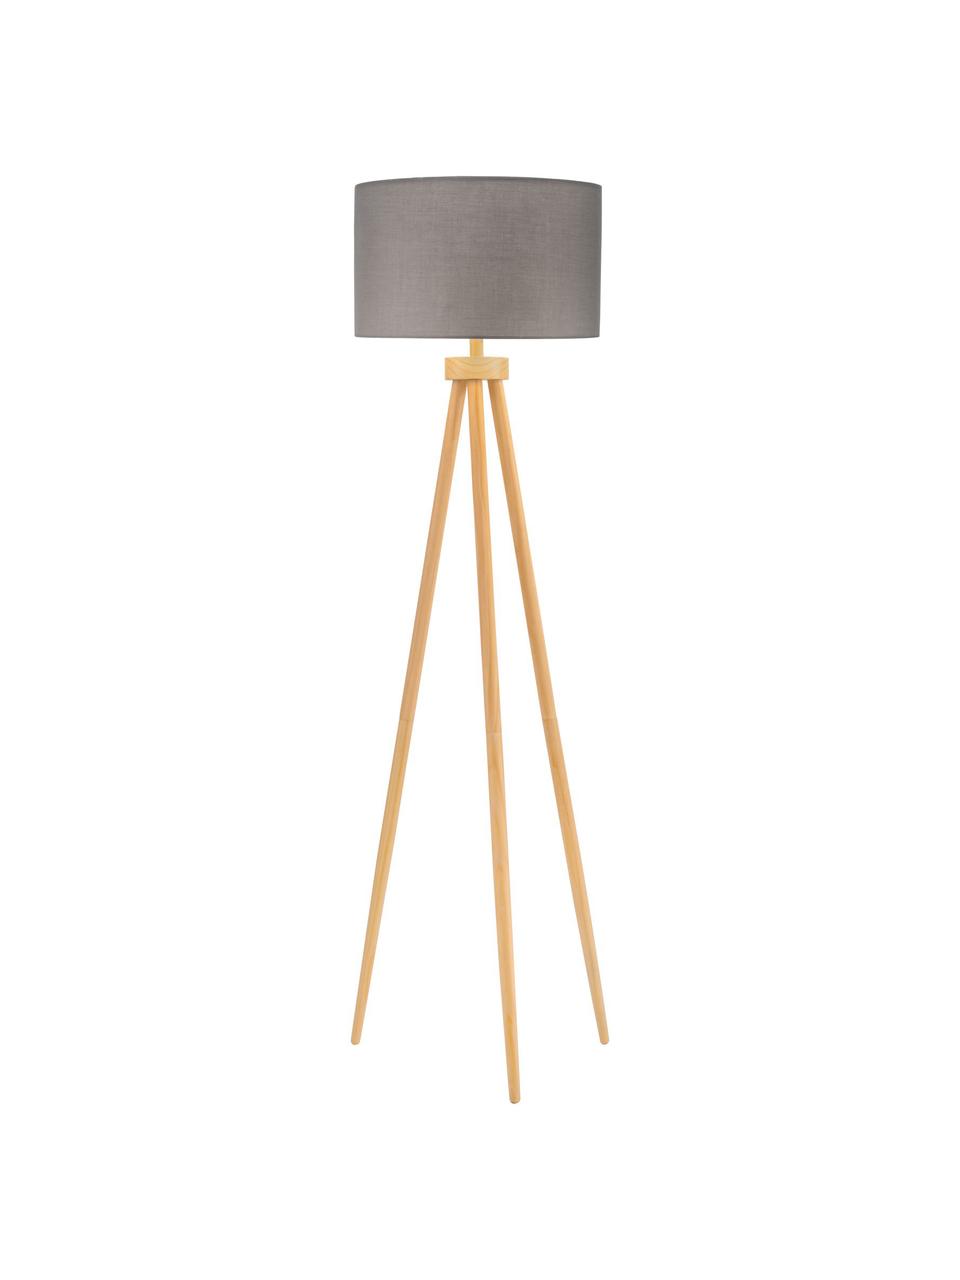 Stojacia tripod lampa s dreveným podstavcom Grand Coziness, Sivá, drevo